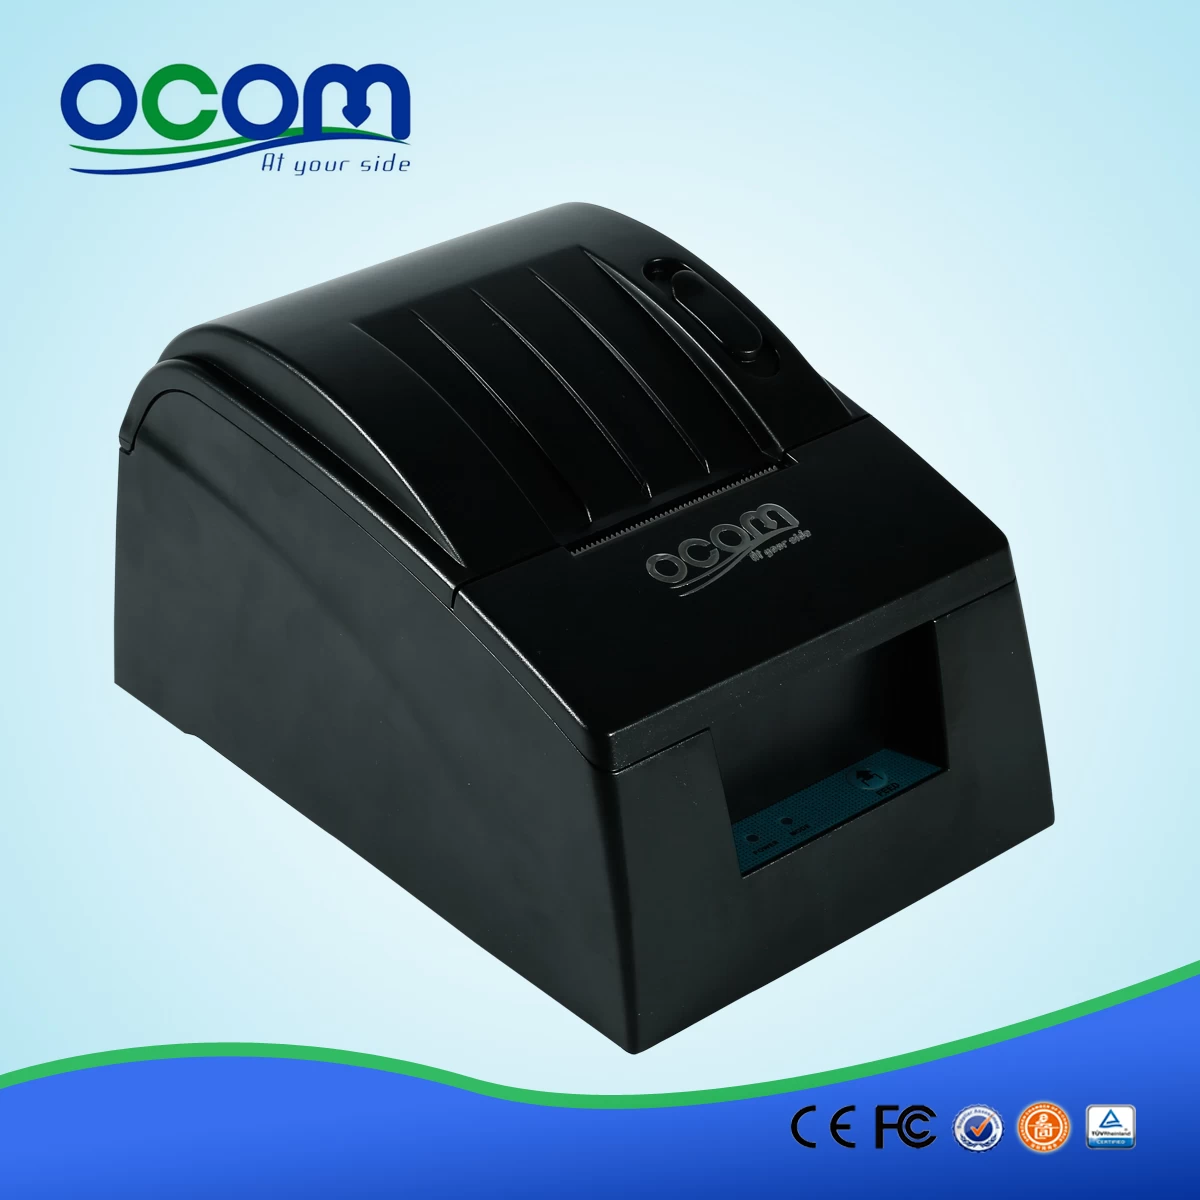 2 inch Pos Thermal Receipt Printer OCPP-585